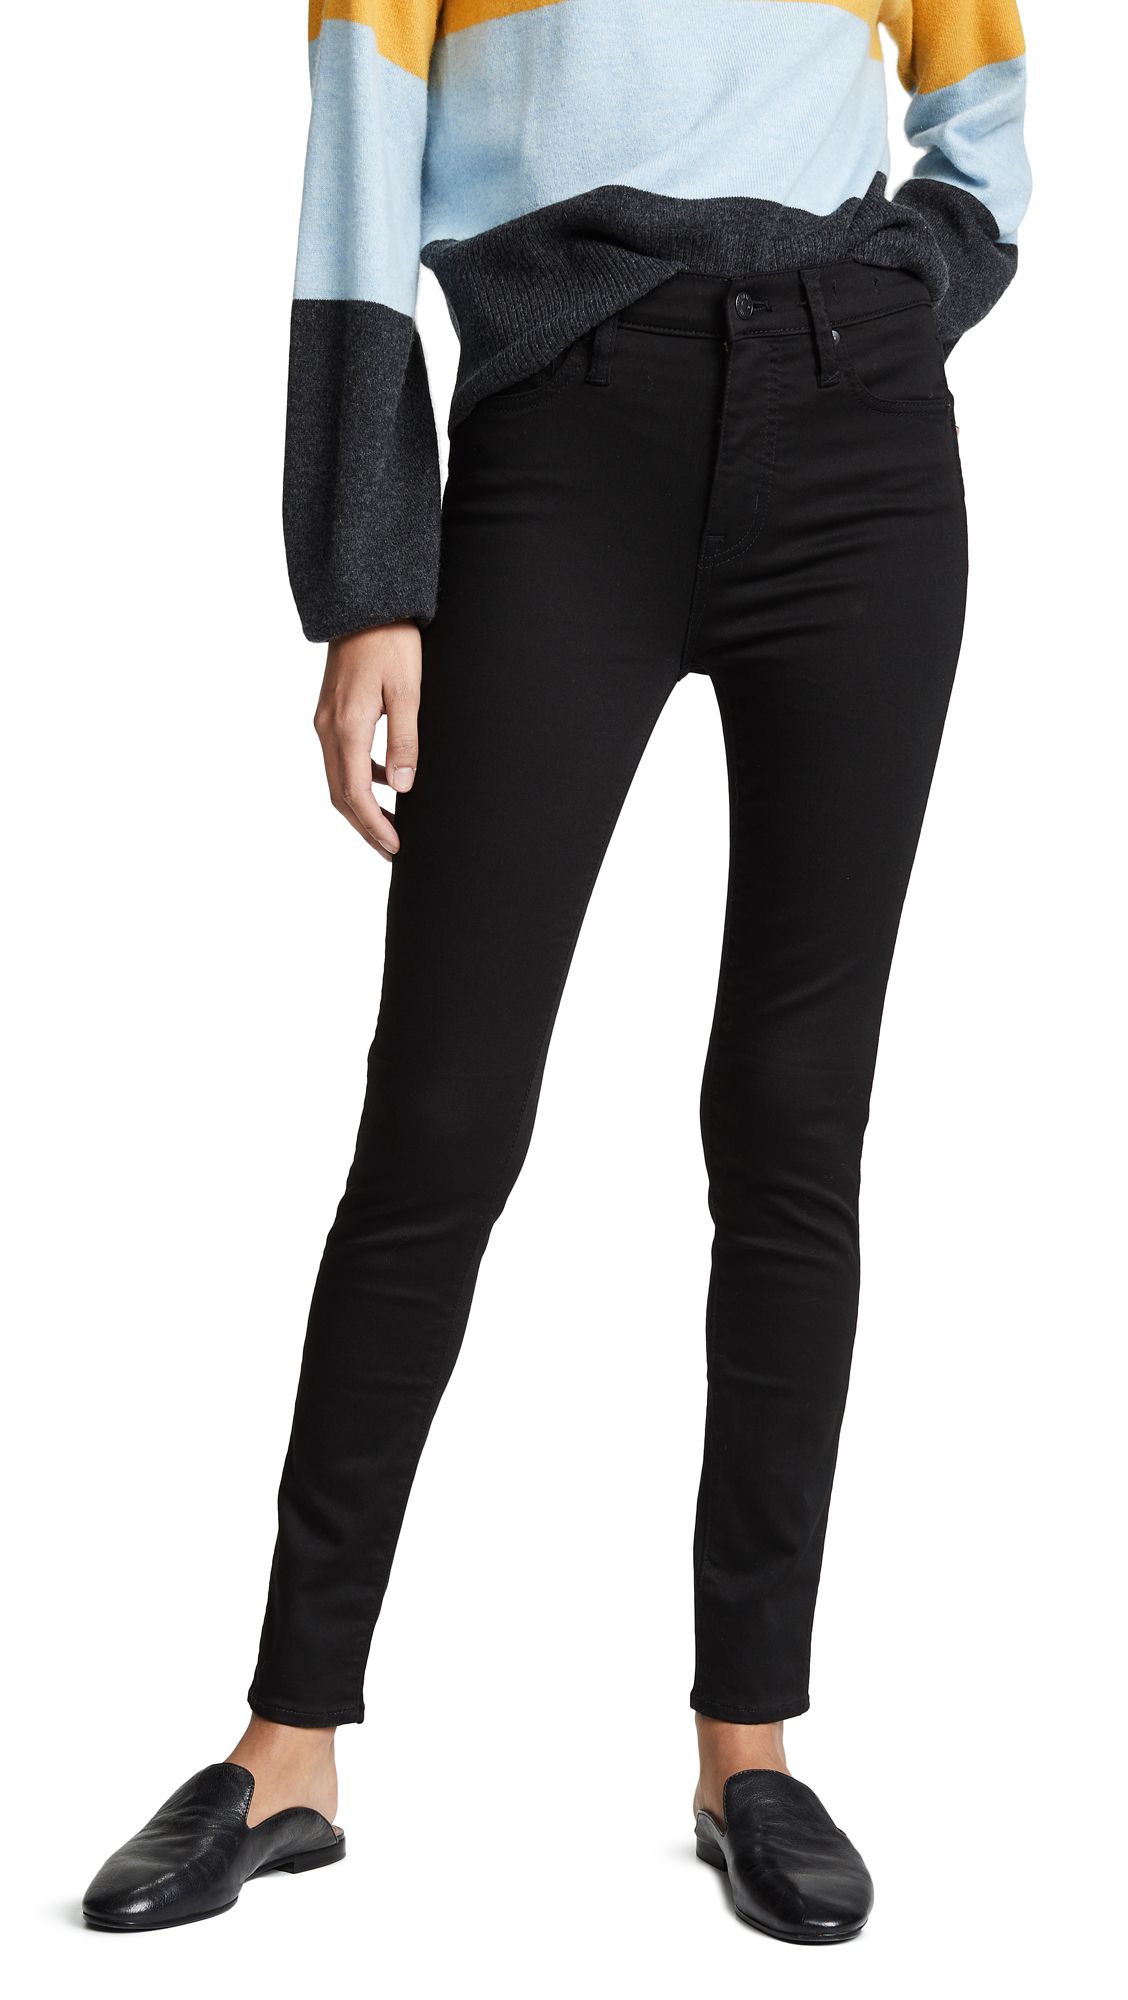 What Jessica Biel Wears With Black Skinny Jeans | Who What Wear